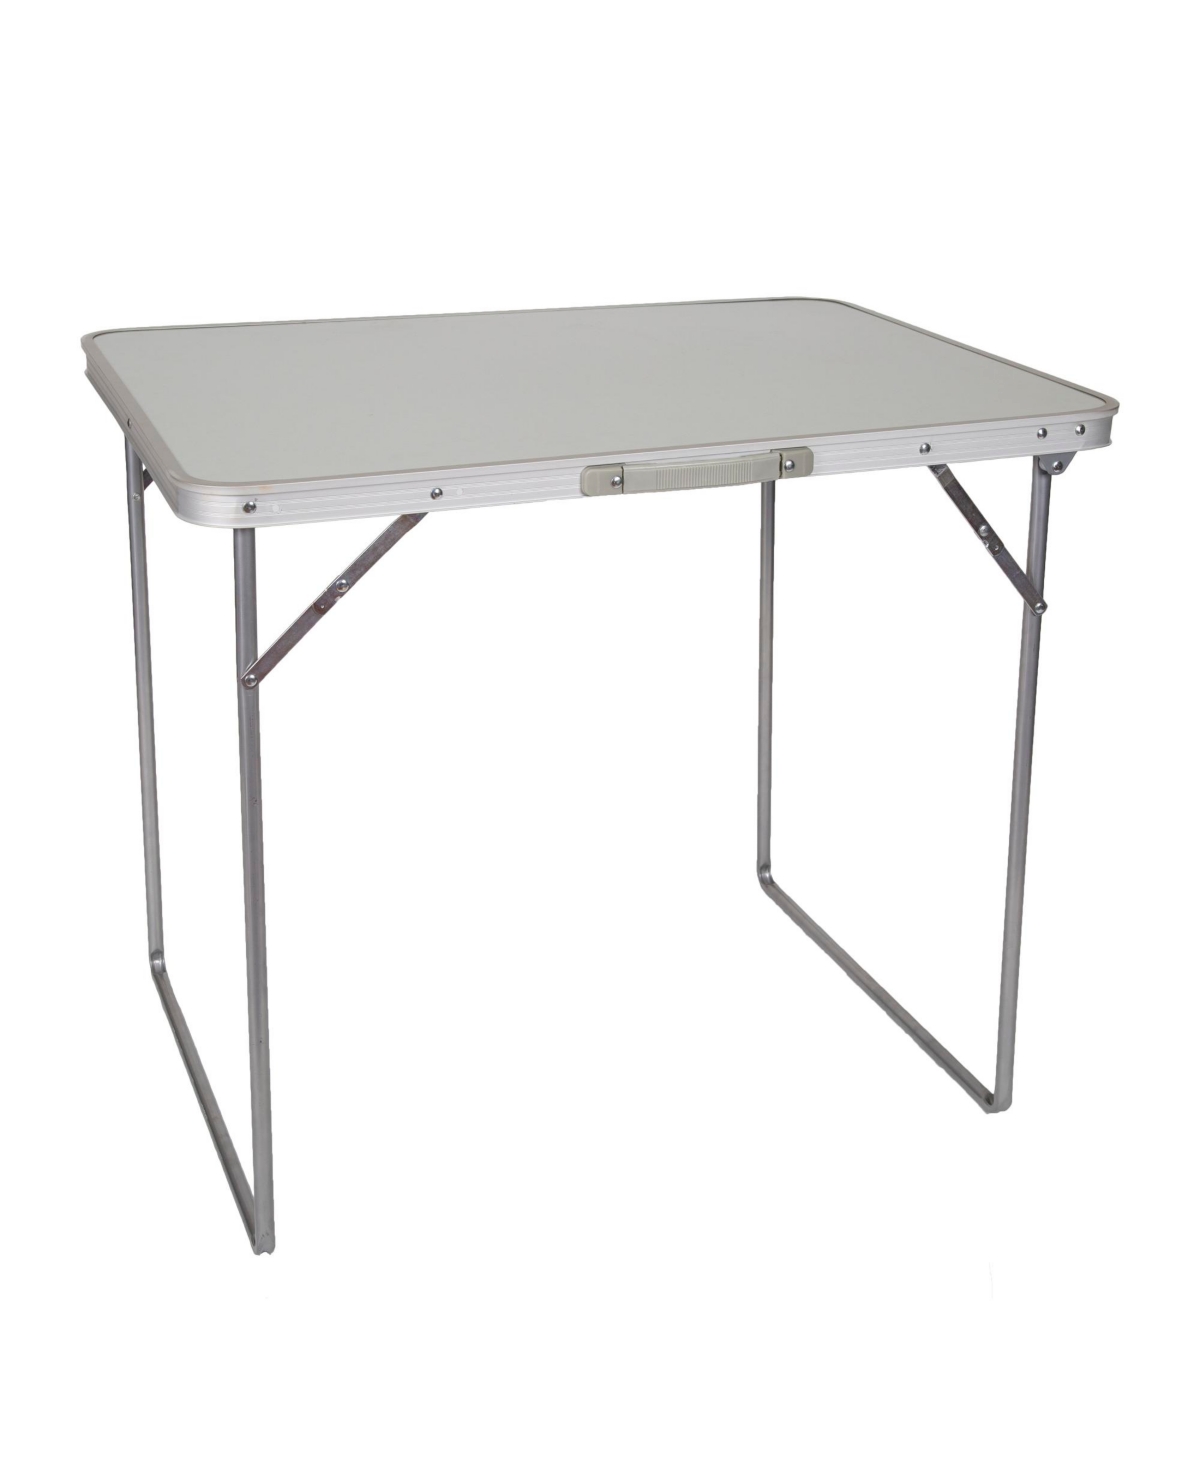 Stan sport Folding Utility Camp Table - Grey